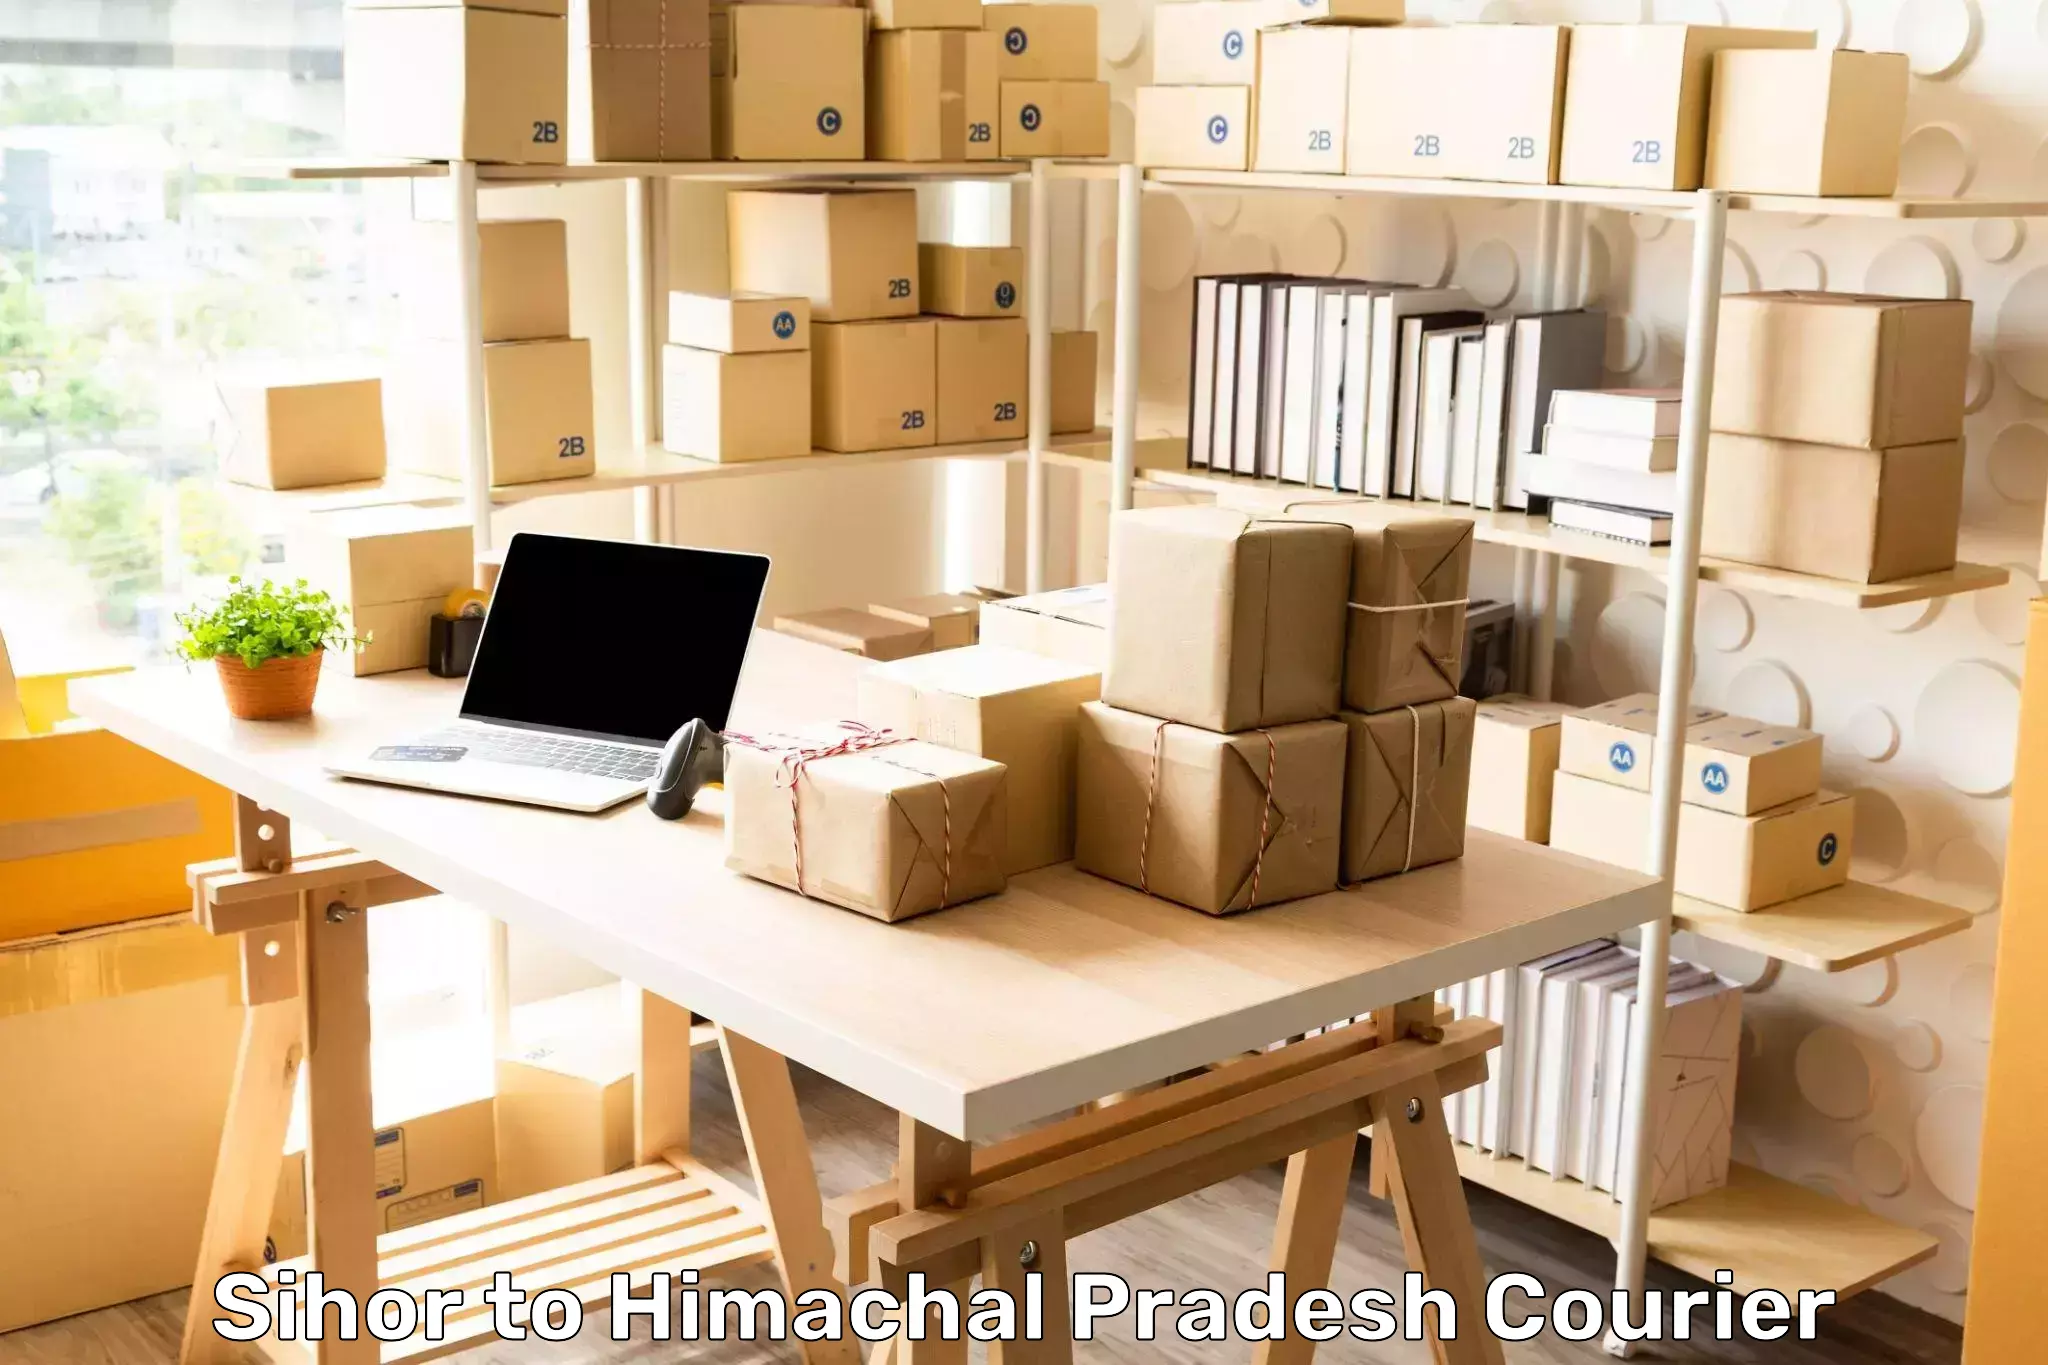 Retail shipping solutions Sihor to Himachal Pradesh